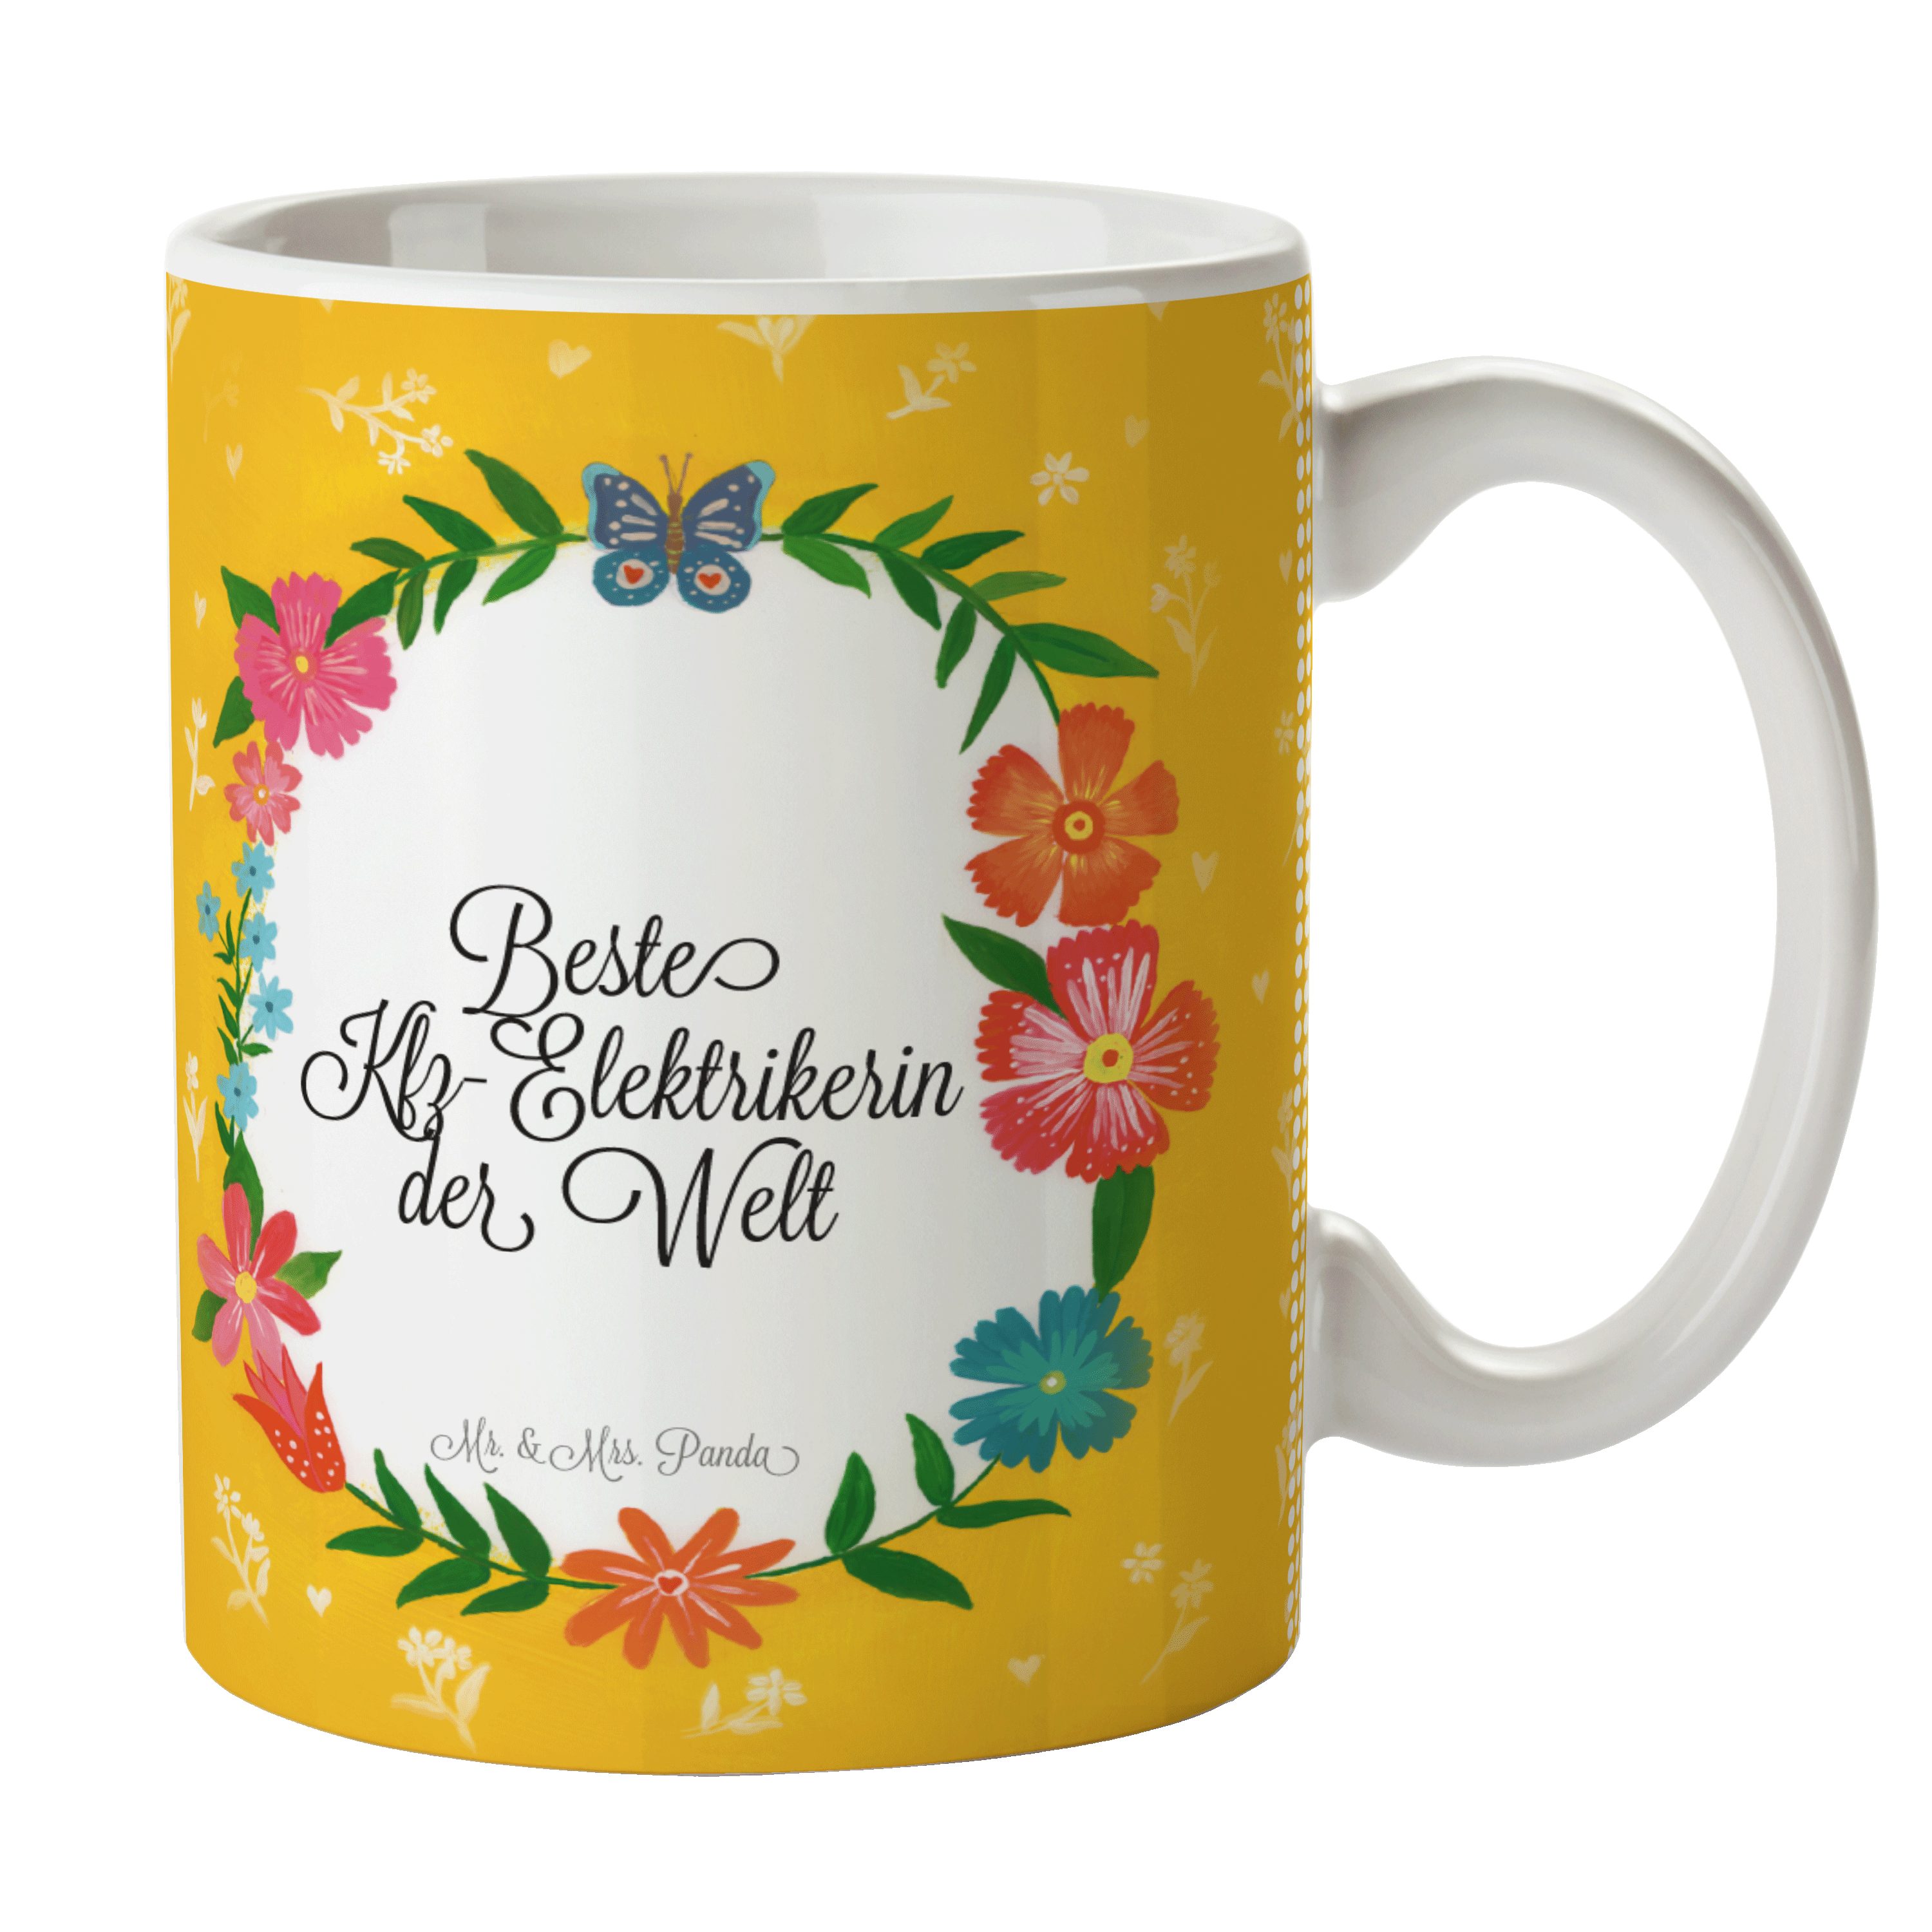 Tasse, Mrs. Panda Tasse Geschenk, Kaffeetas, Geschenk Keramik Becher, & Rente, Kfz-Elektrikerin Mr. -